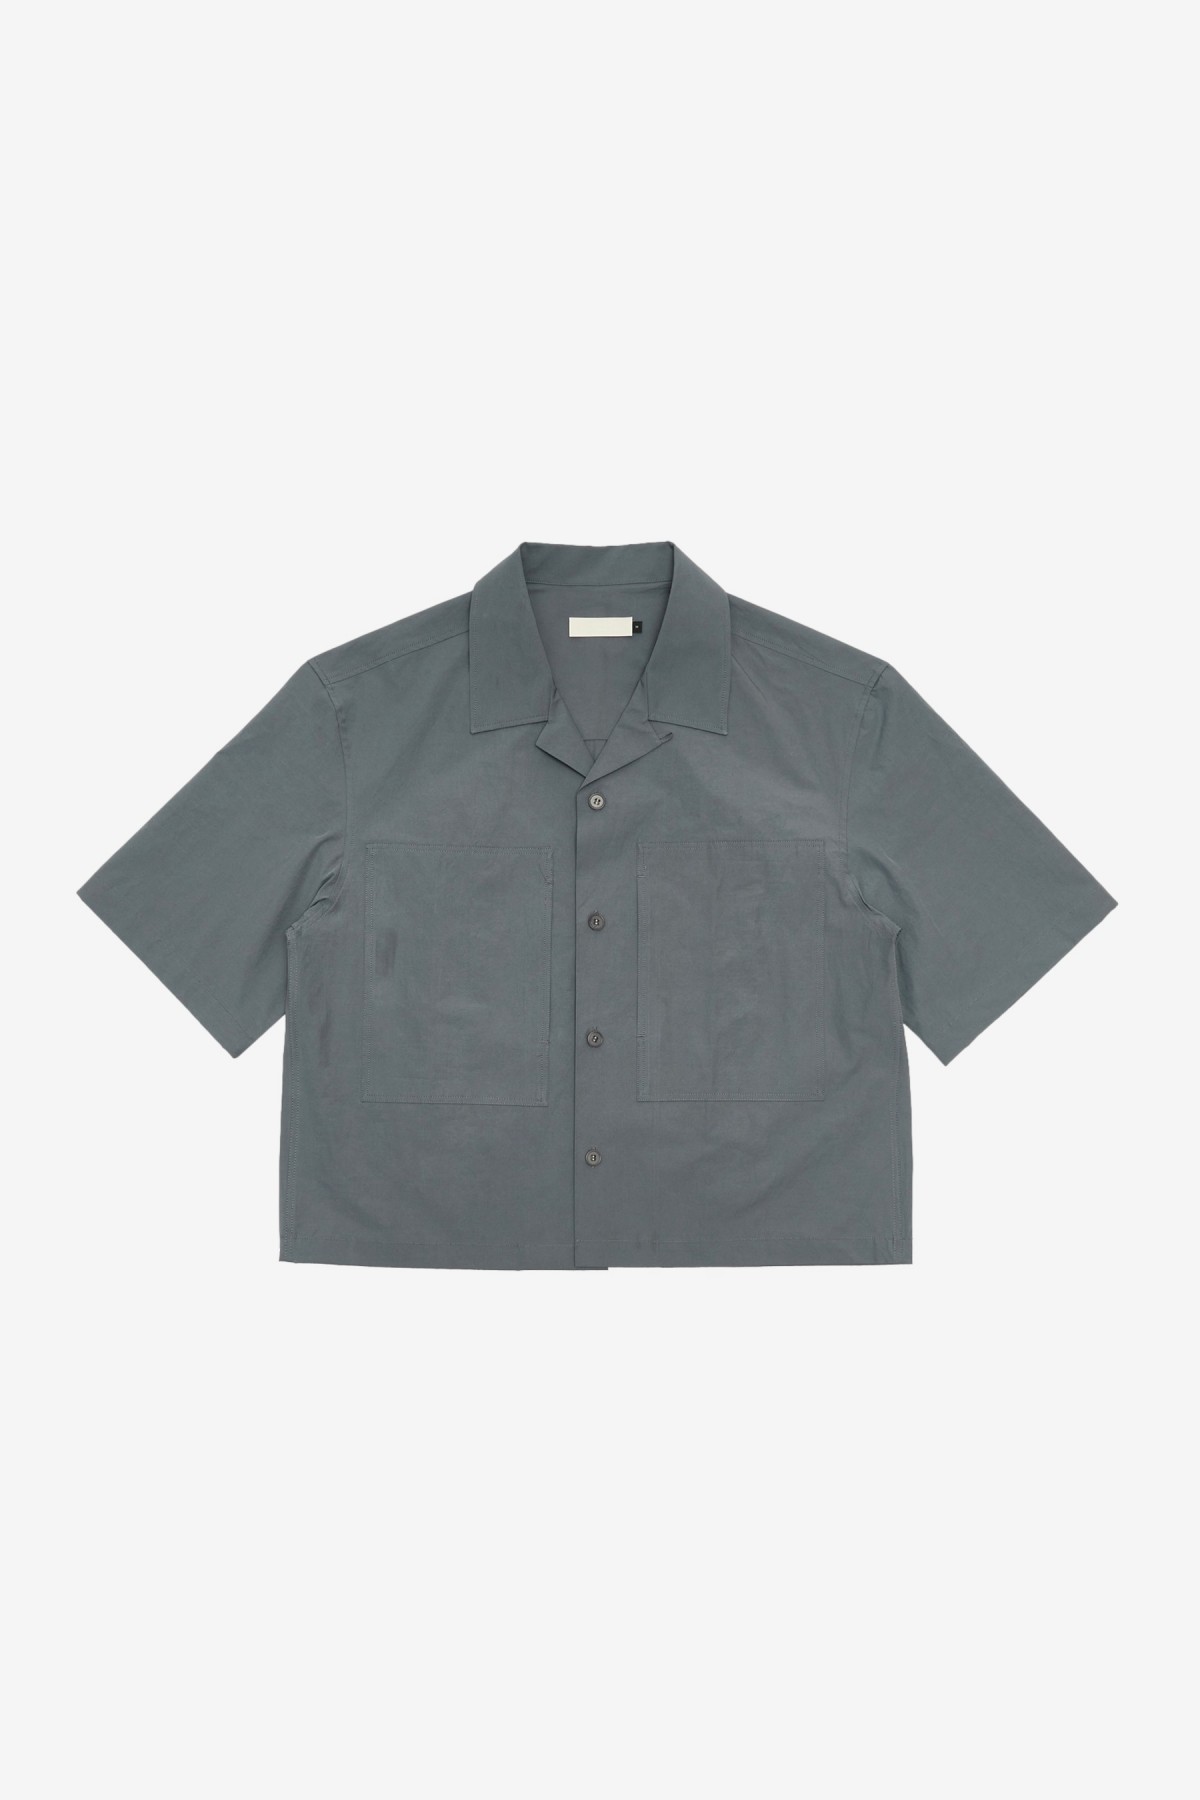 Amomento Pocket Half Shirts in Charcoal